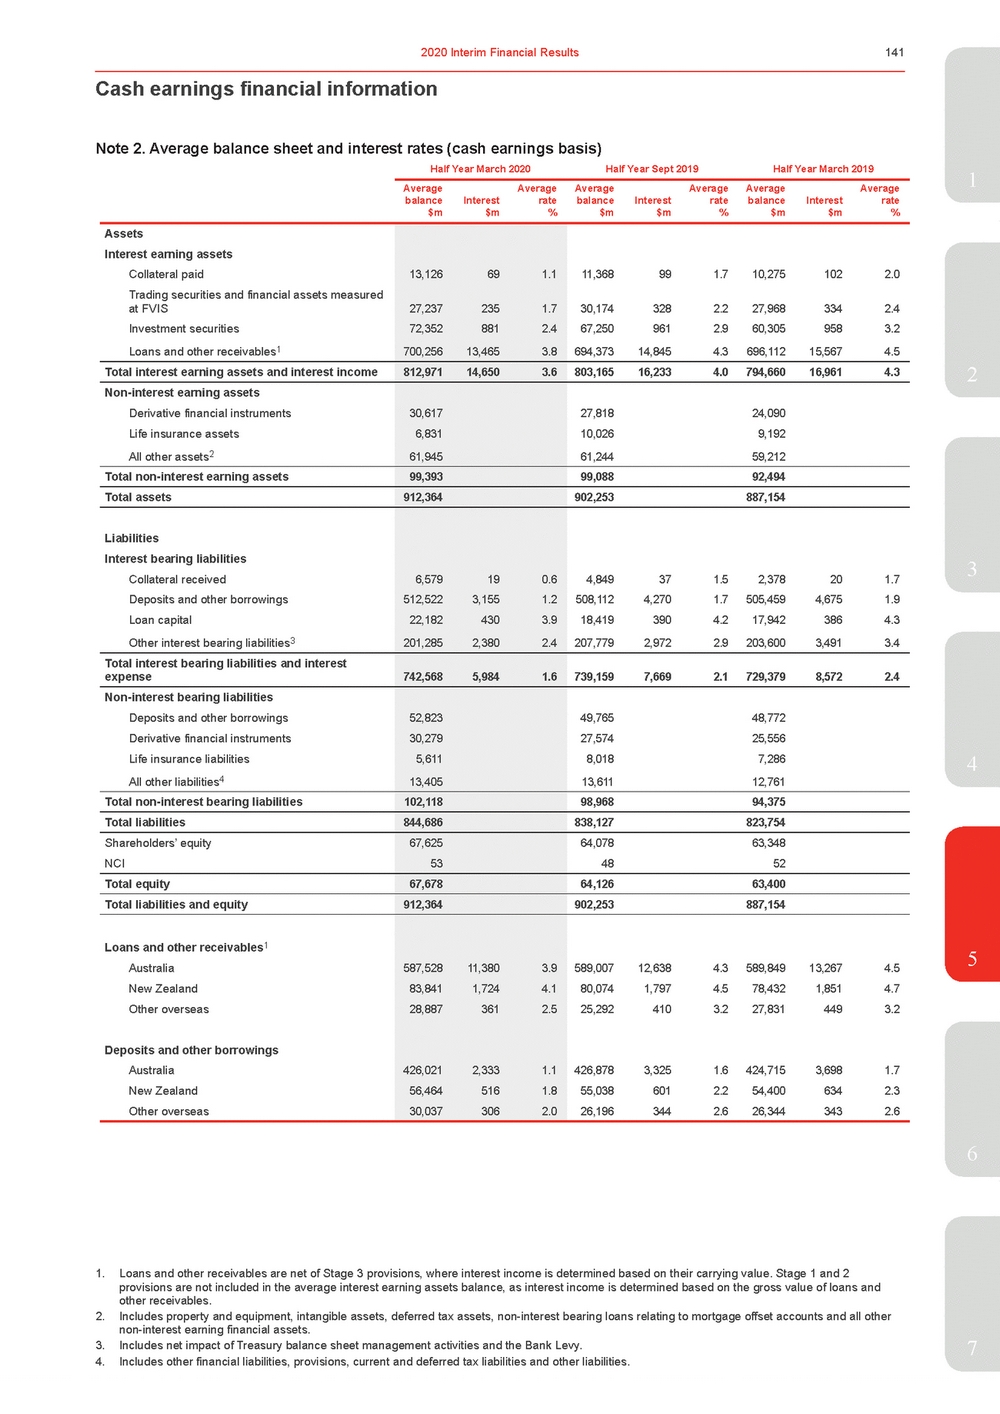 11676-3-ex1_westpac 2020 interim financial results announcement_page_146.jpg